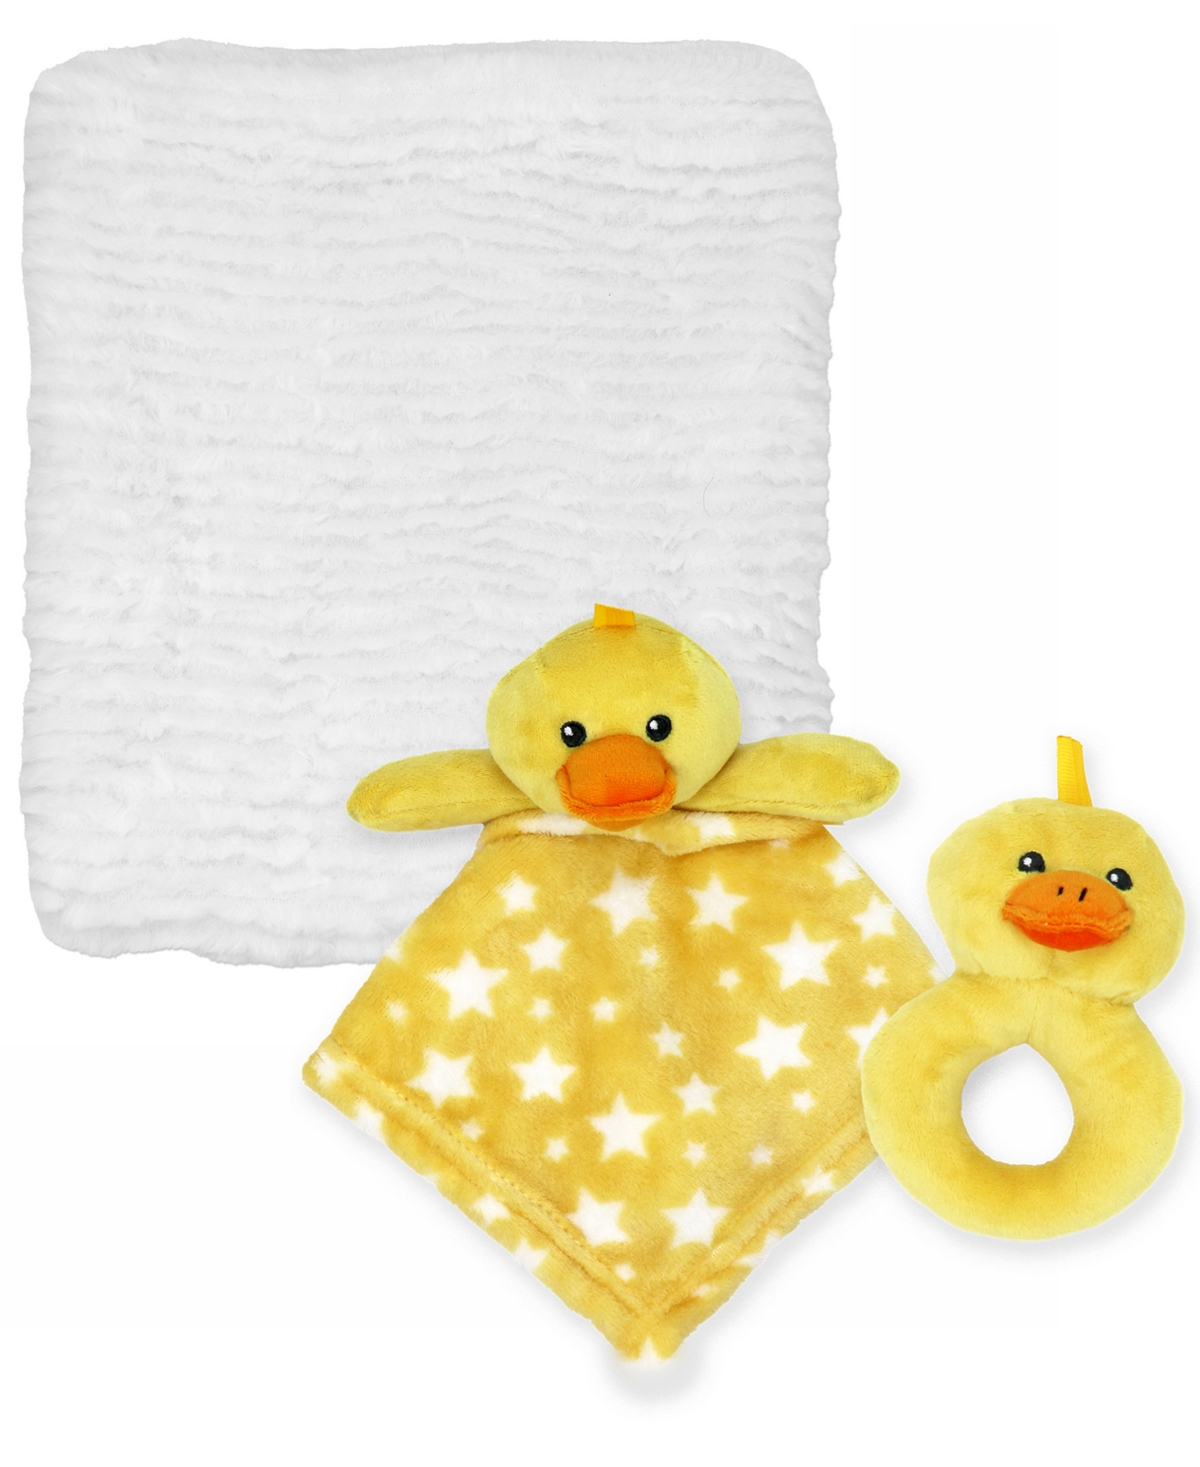 Baby Mode Jesse & Lulu Baby Boys Or Baby Girls Ridged Plush Blanket, 3 Piece Set In White And Yellow